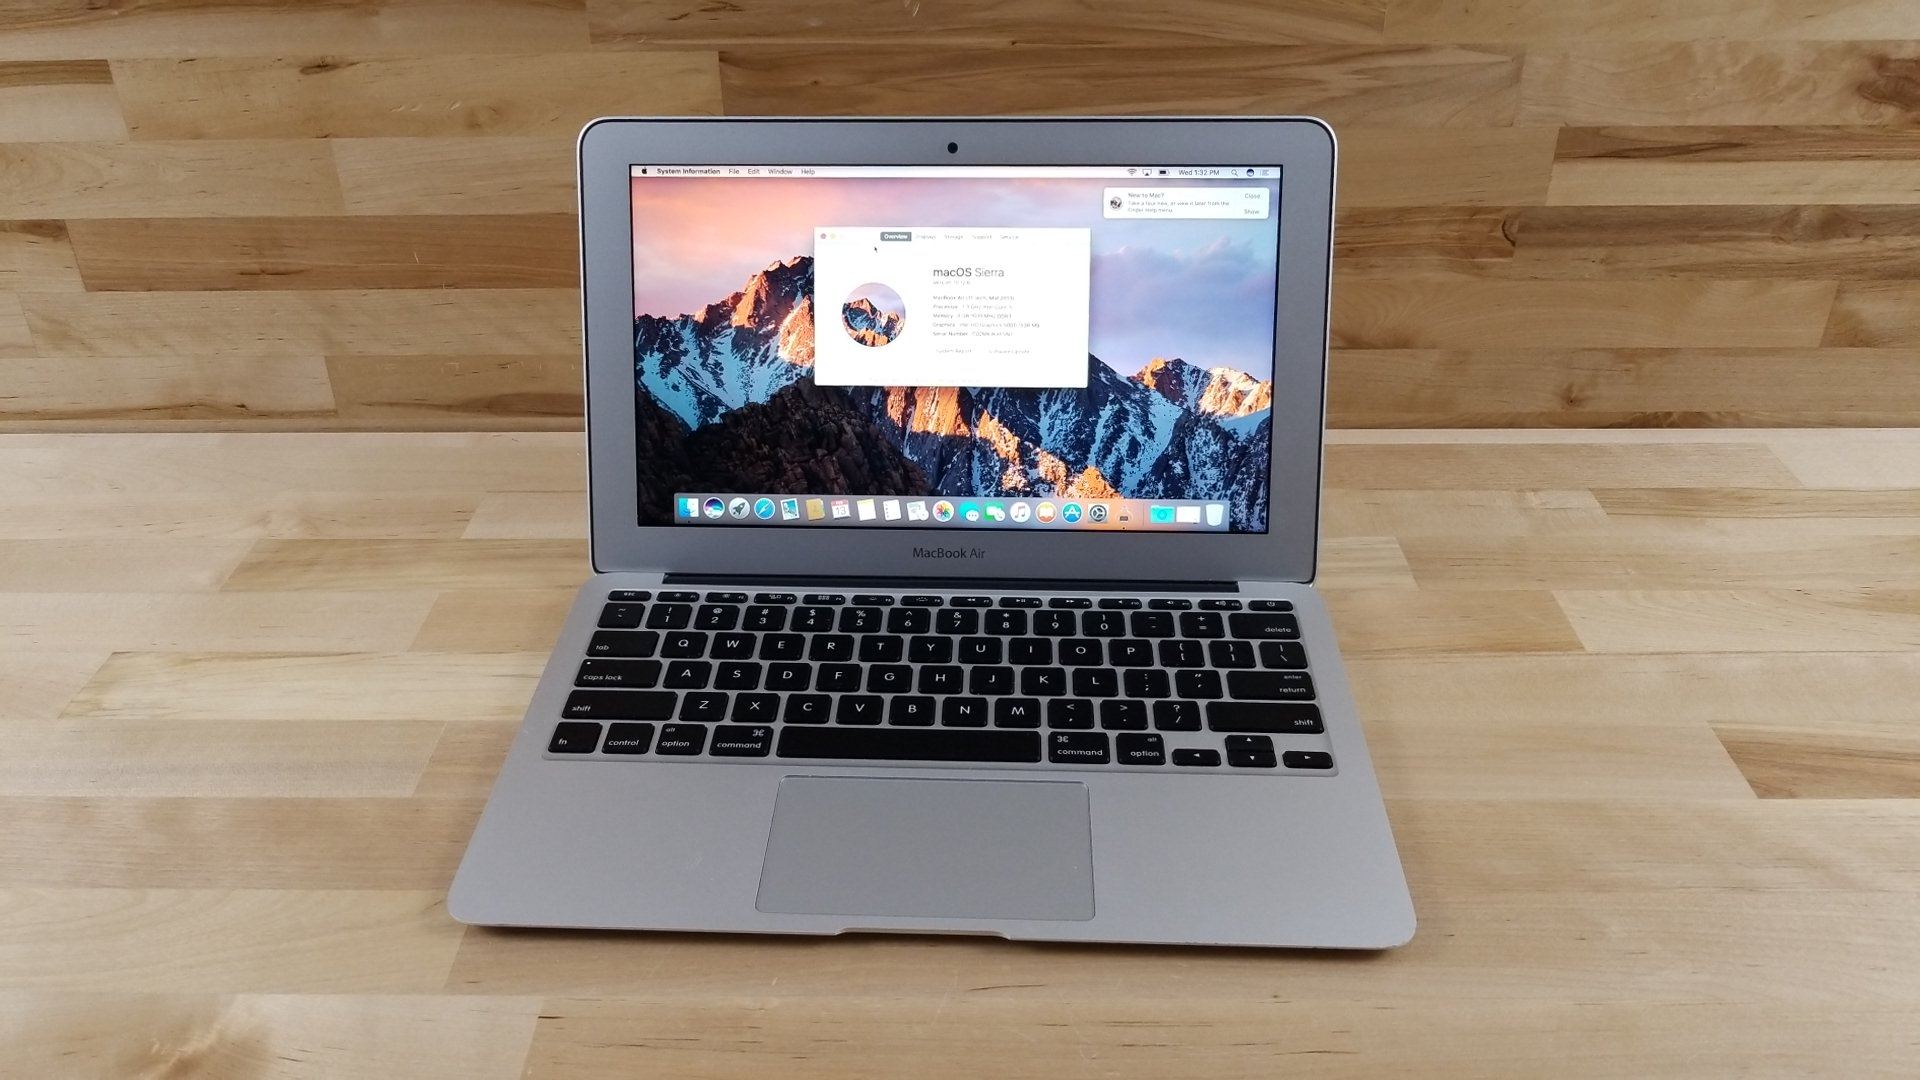 Apple MacBook Air (11-inch Mid 2013) 1.3 GHz Intel core i5 128GB SSD